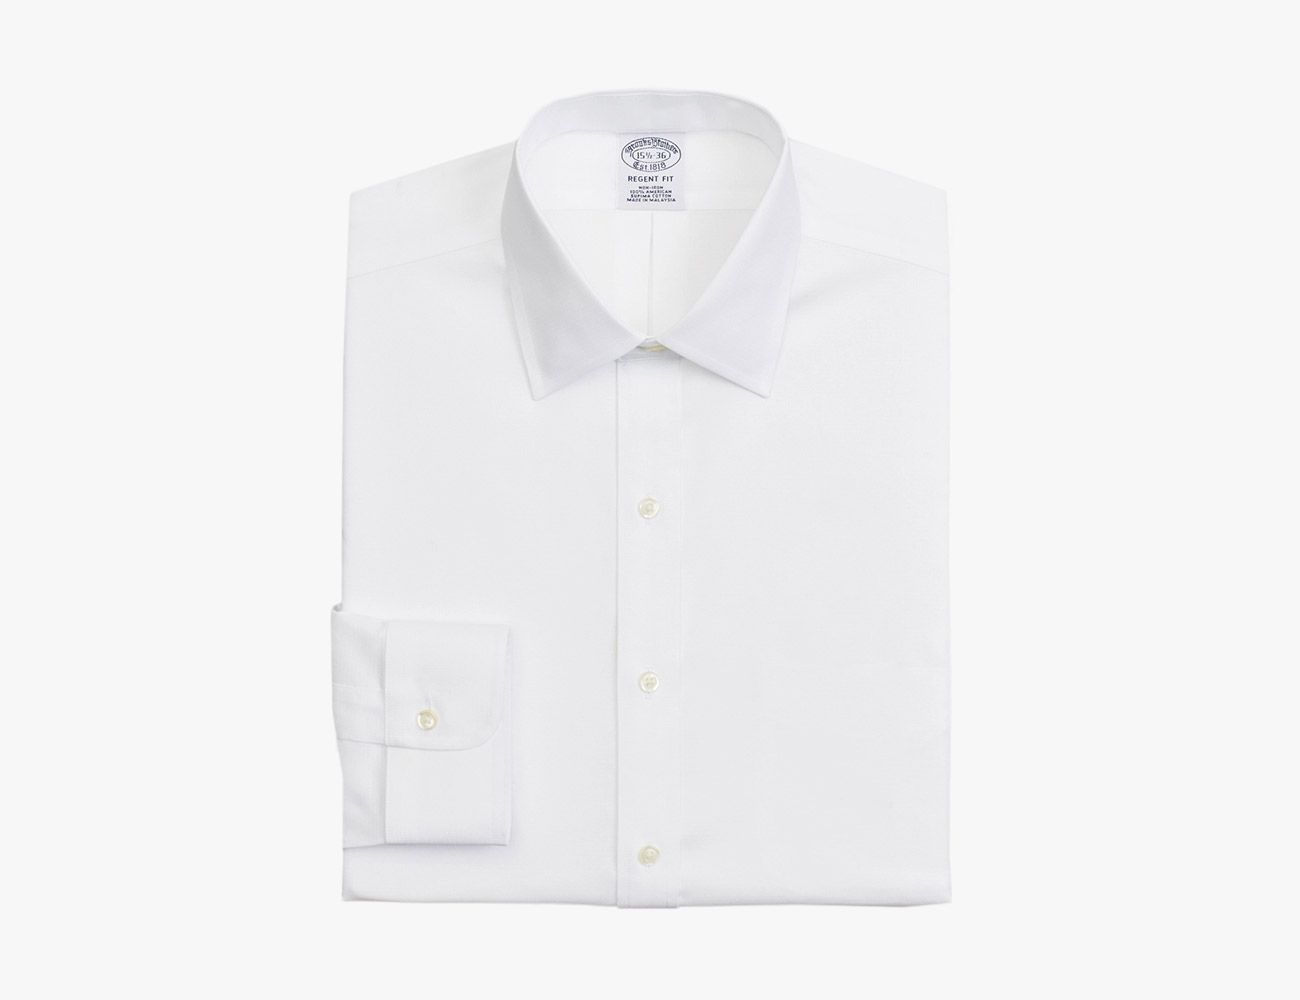 How to Wear Men's White Dress Shirt - Suits Expert